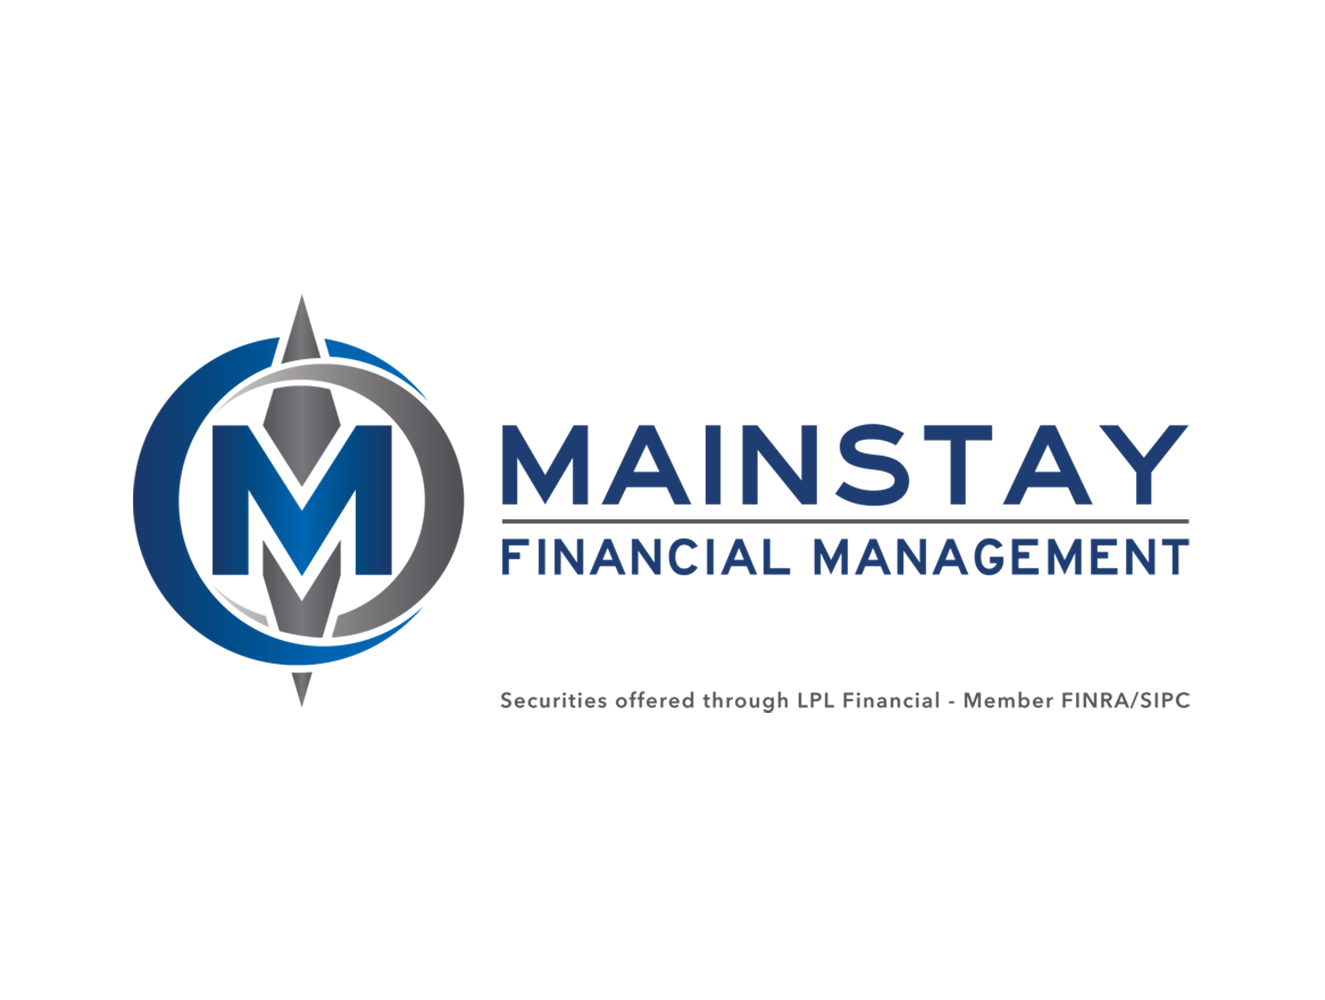 MFM logo, two color version.